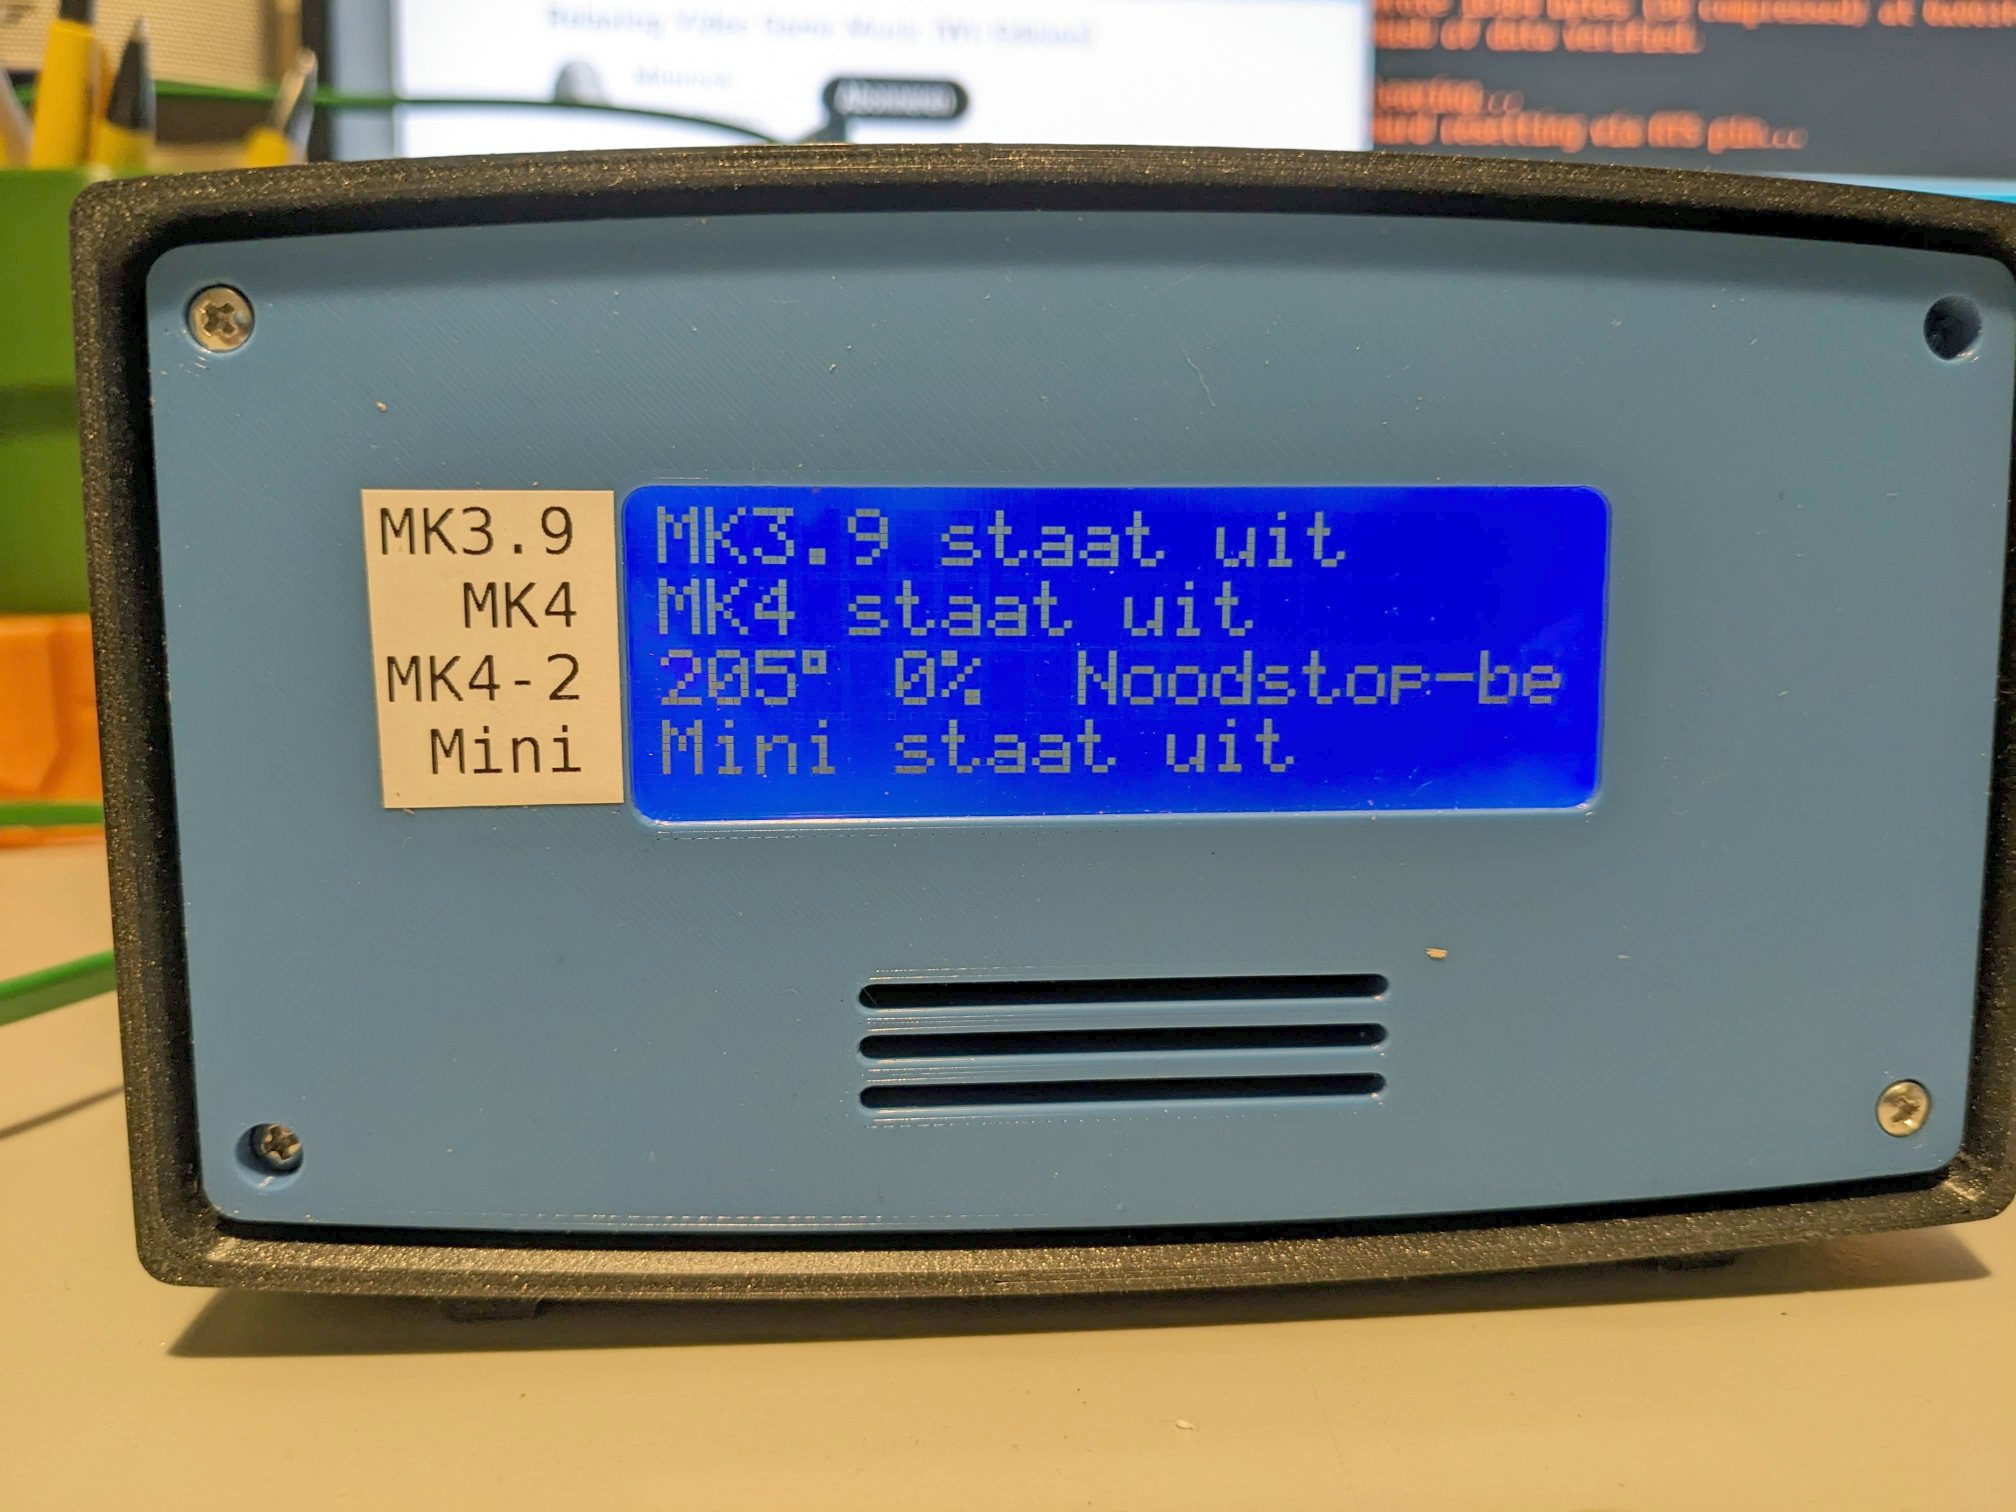 Print monitor with big LCD